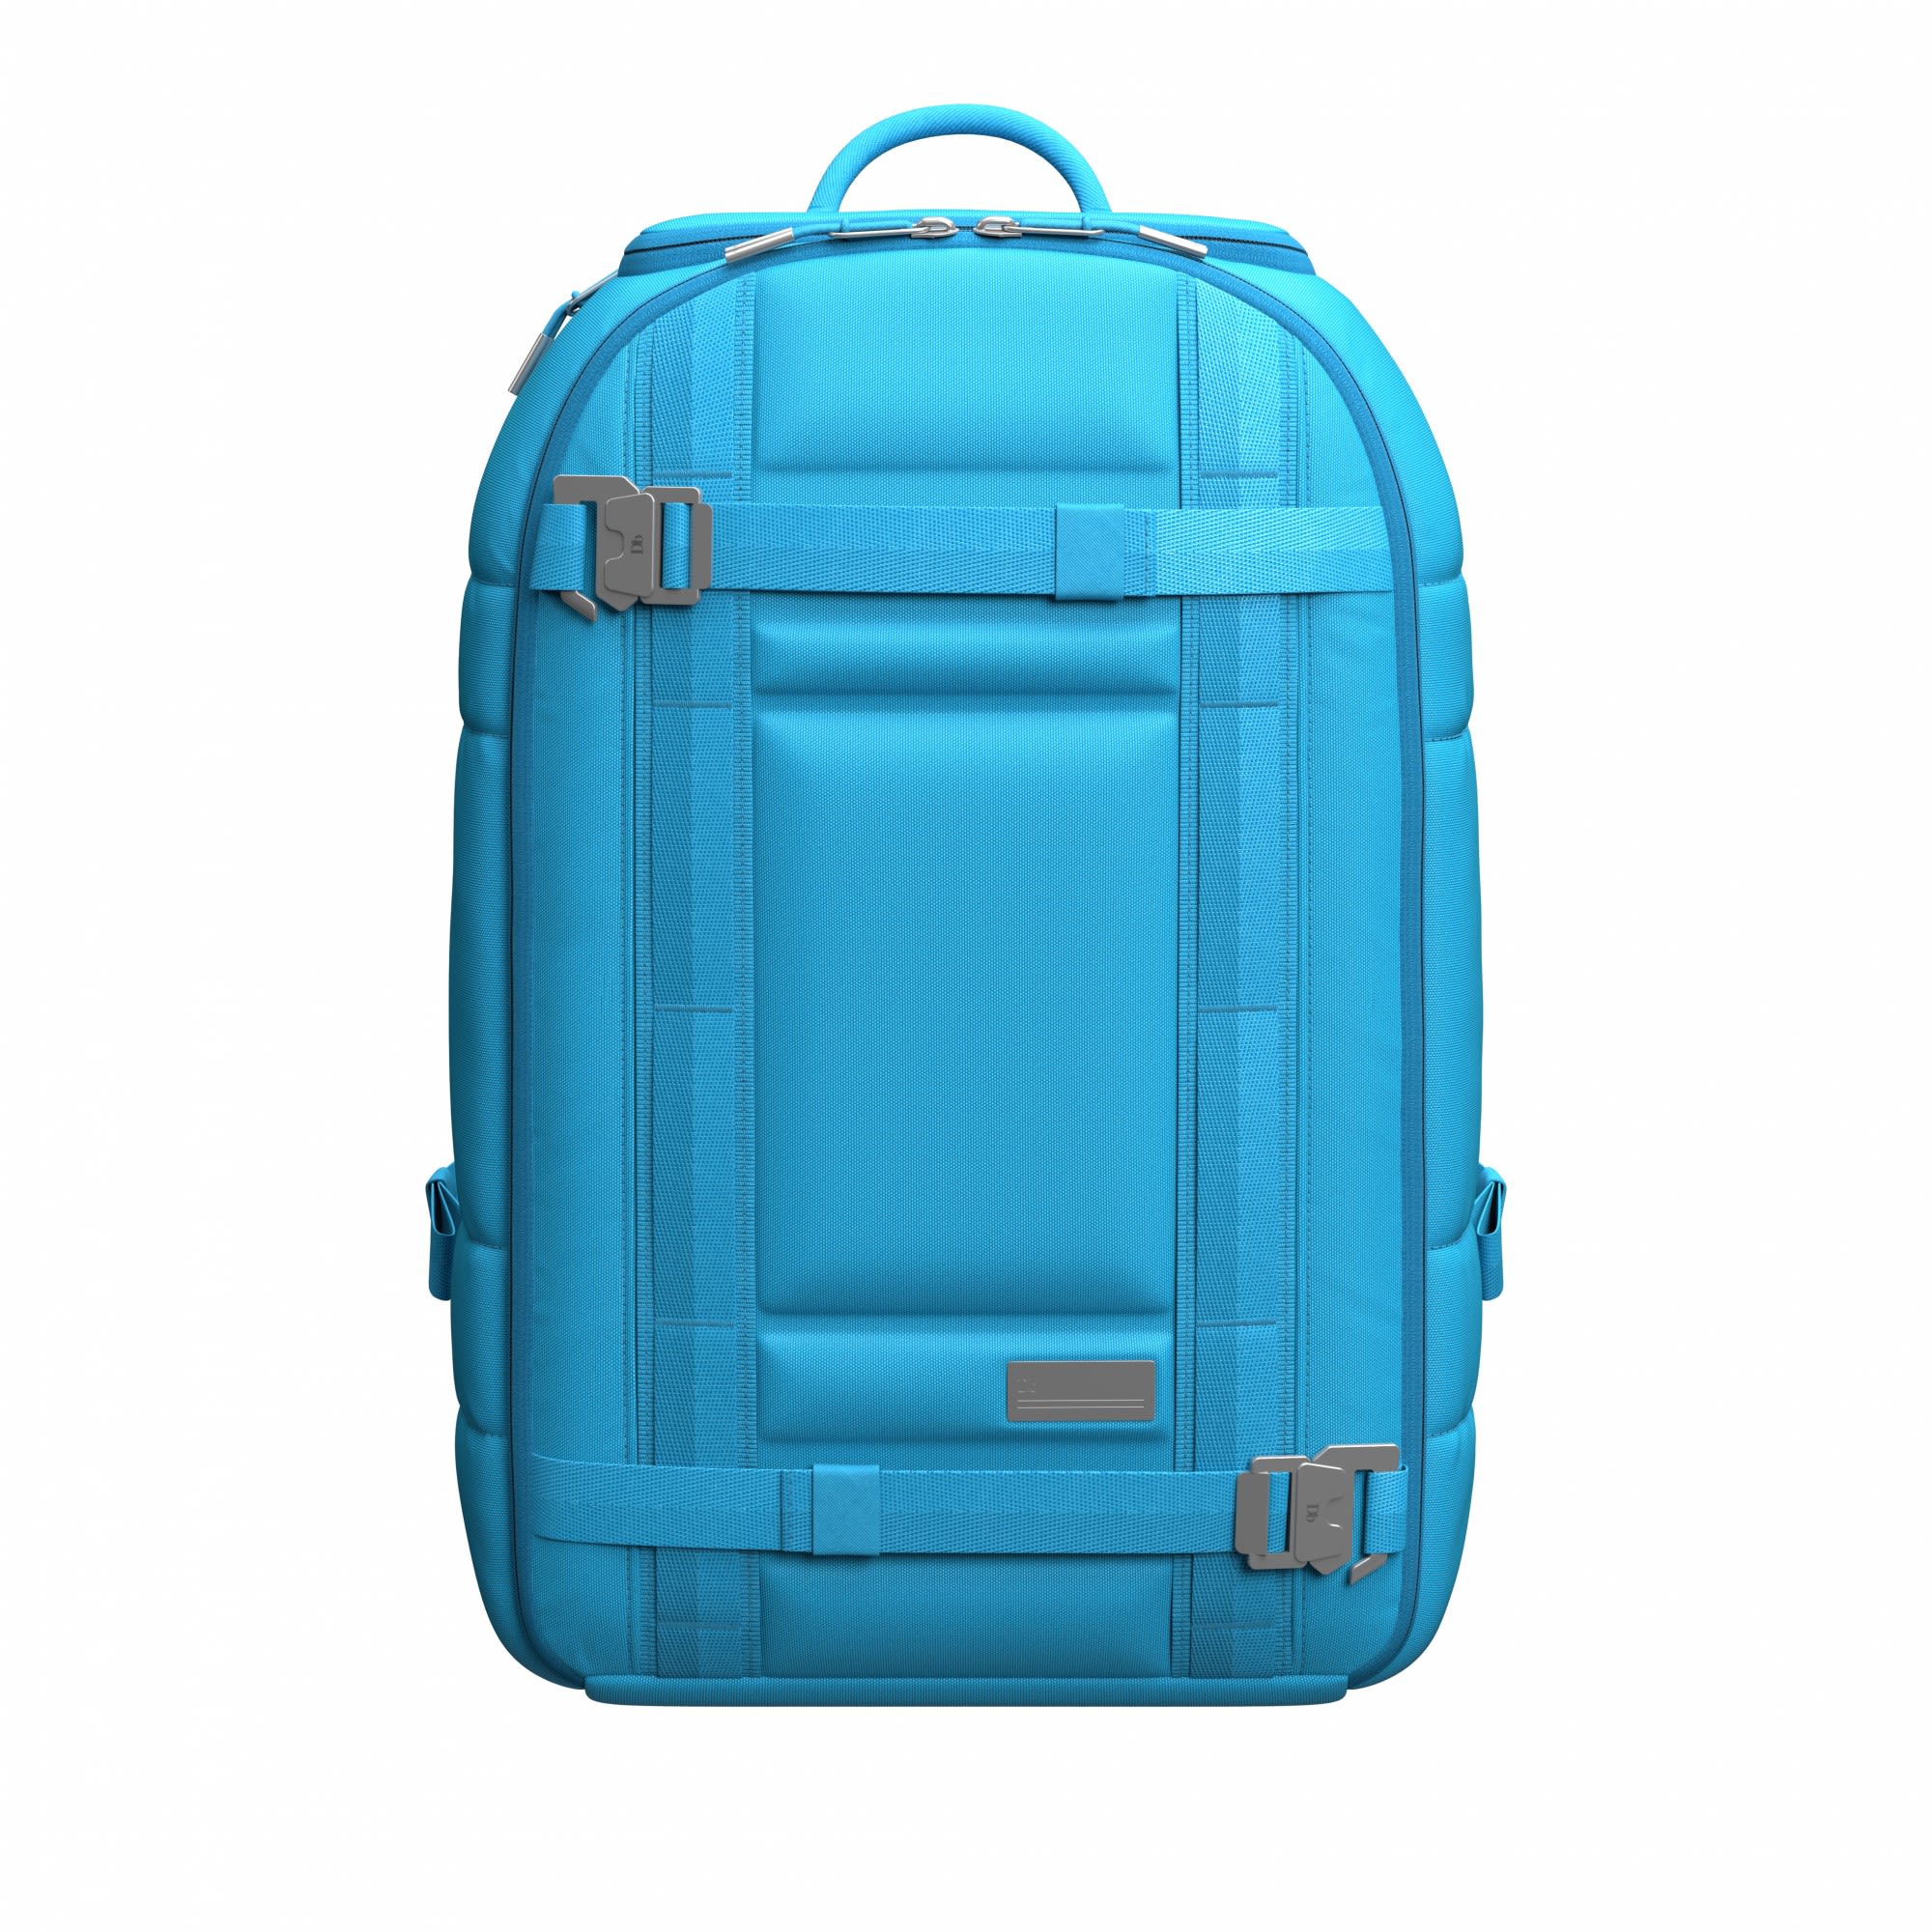 Db THE Ramverk 21L Backpack Blau- Daypacks- Grsse 21l - Farbe Ice Blue unter Db